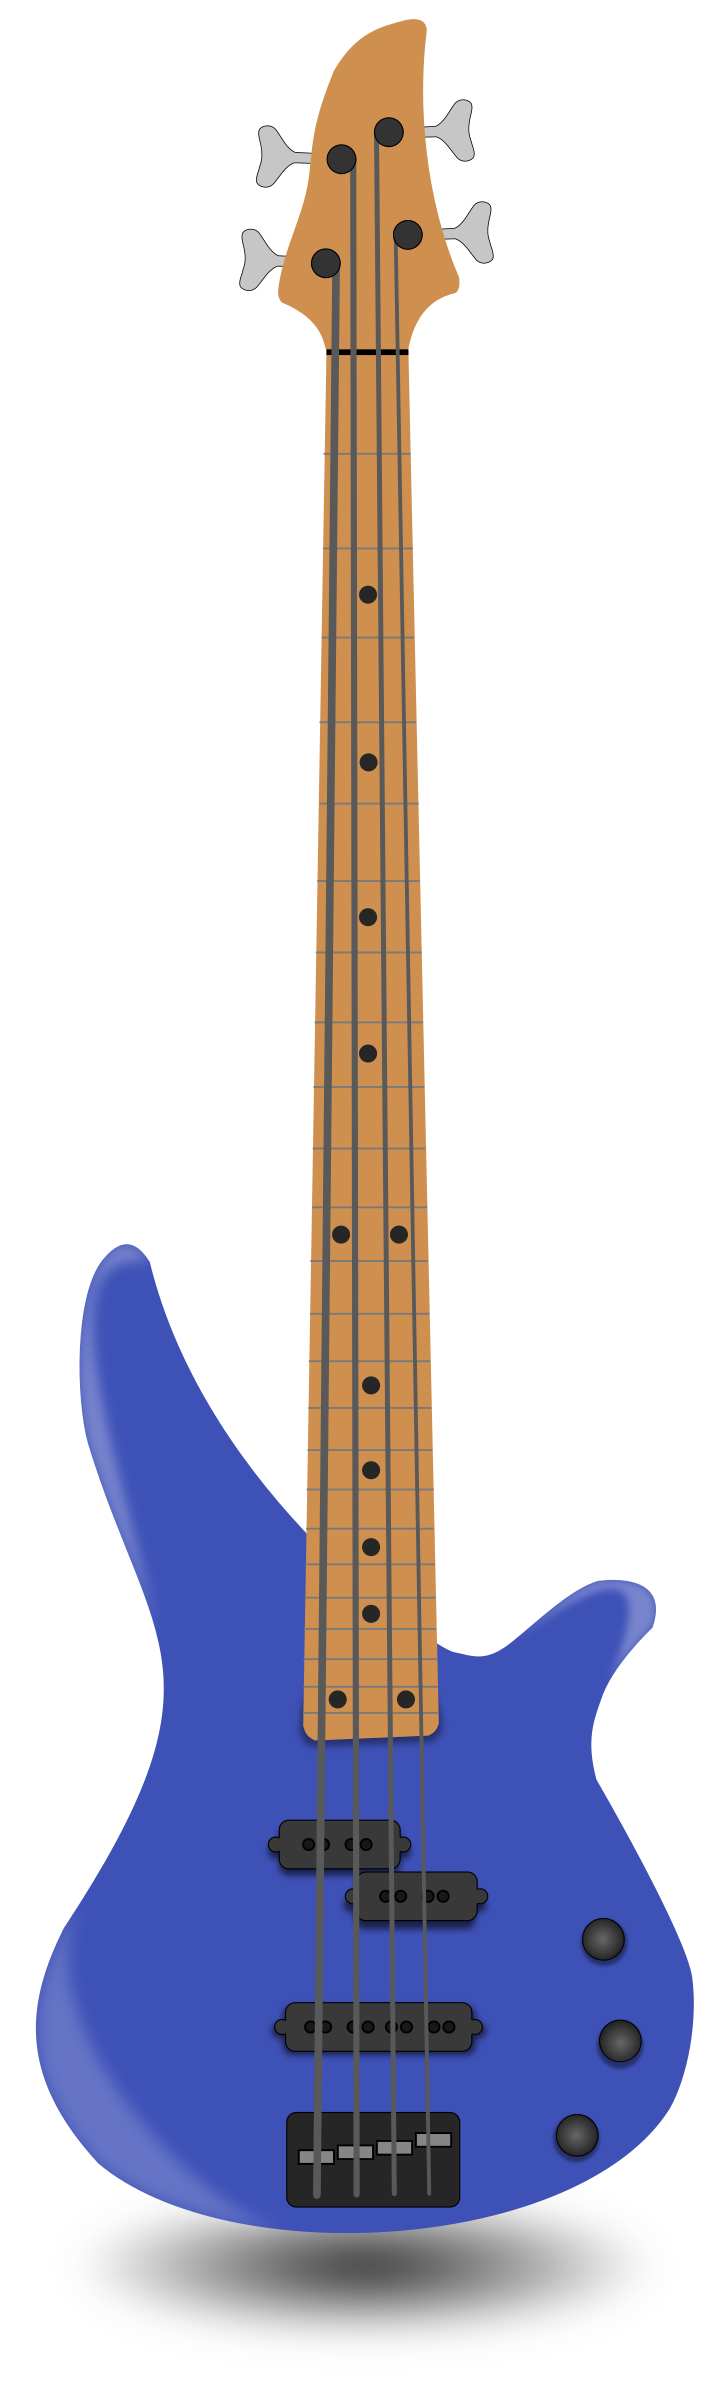 Bass strings big image. Clipart guitar simple